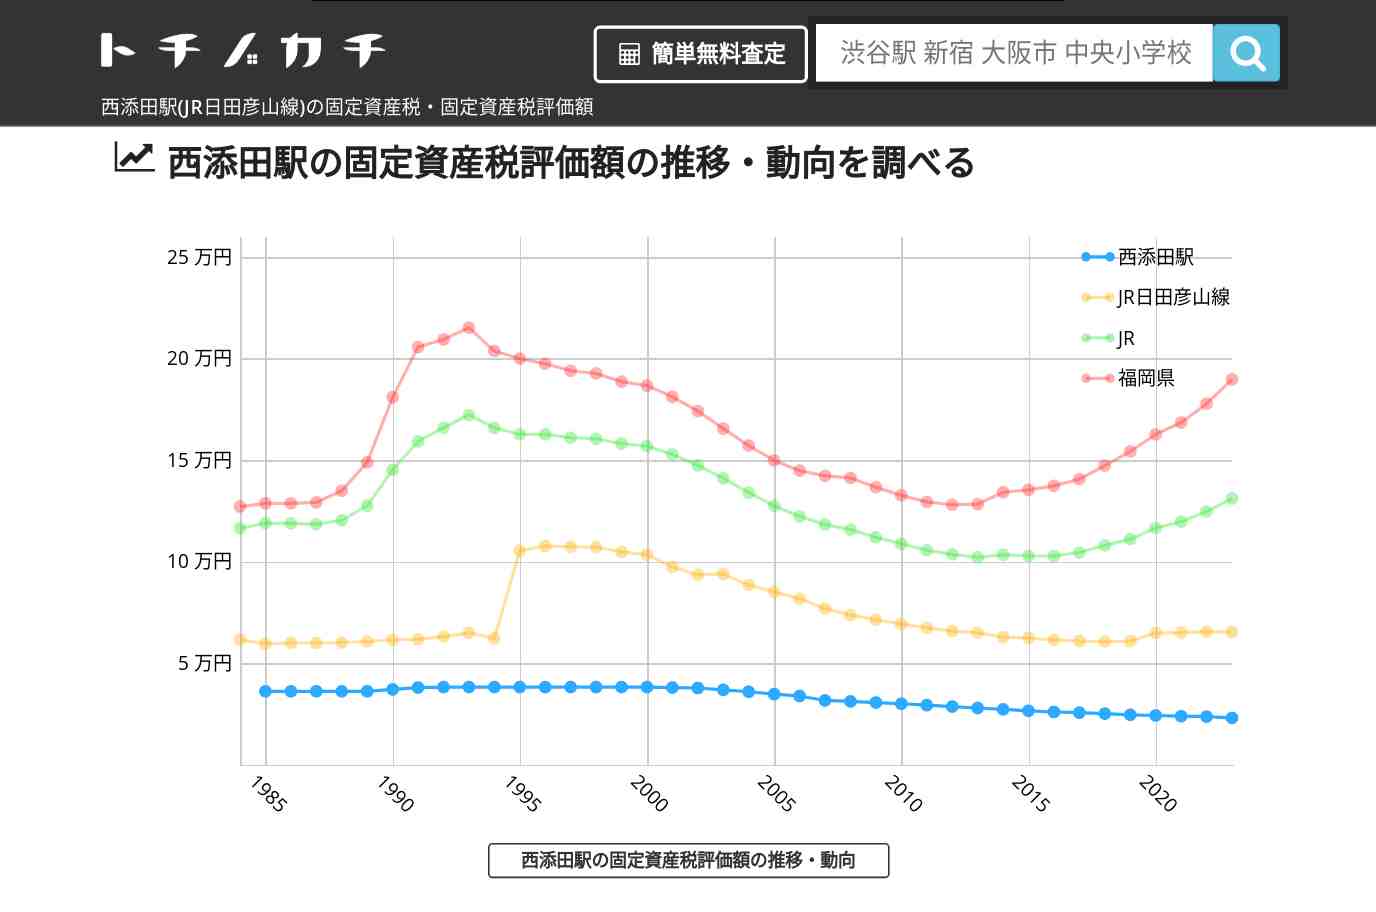 西添田駅(JR日田彦山線)の固定資産税・固定資産税評価額 | トチノカチ